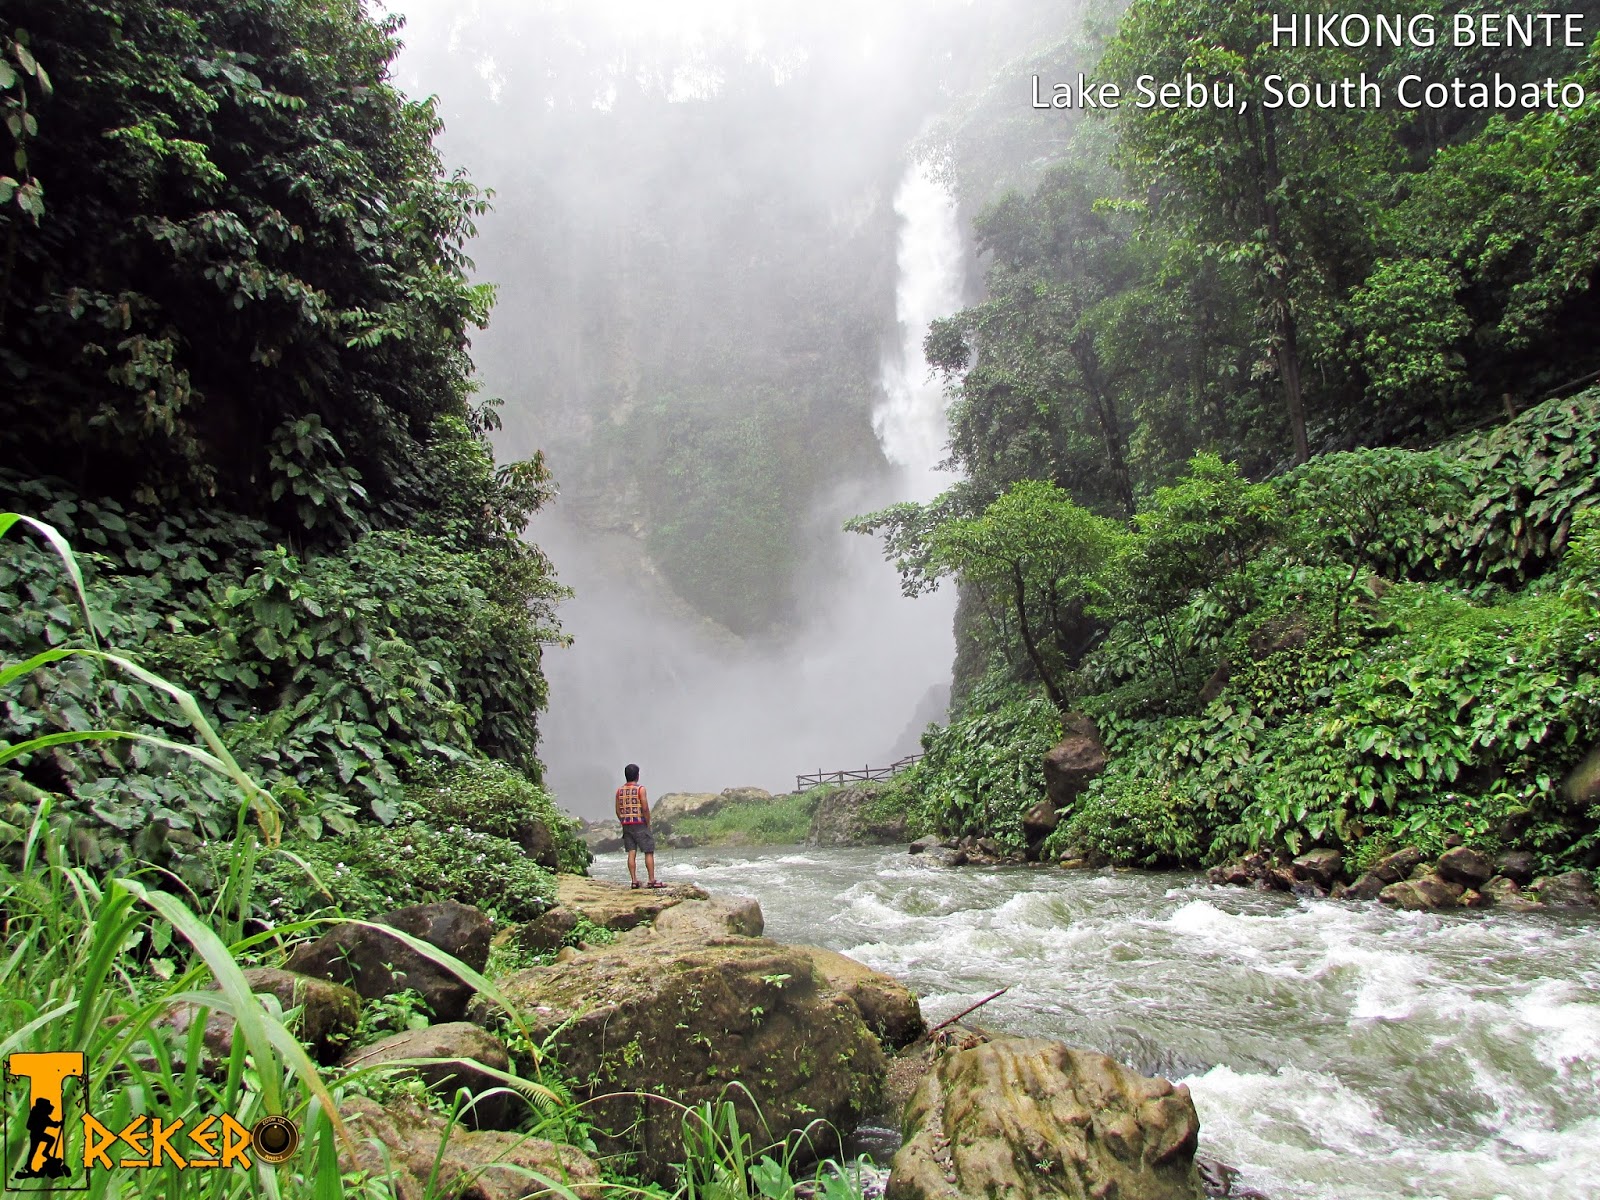 PHILIPPINEN MAGAZIN -   DIENSTAGSTHEMA - WASSERFÄLLE - Seven Falls in South Cotabato